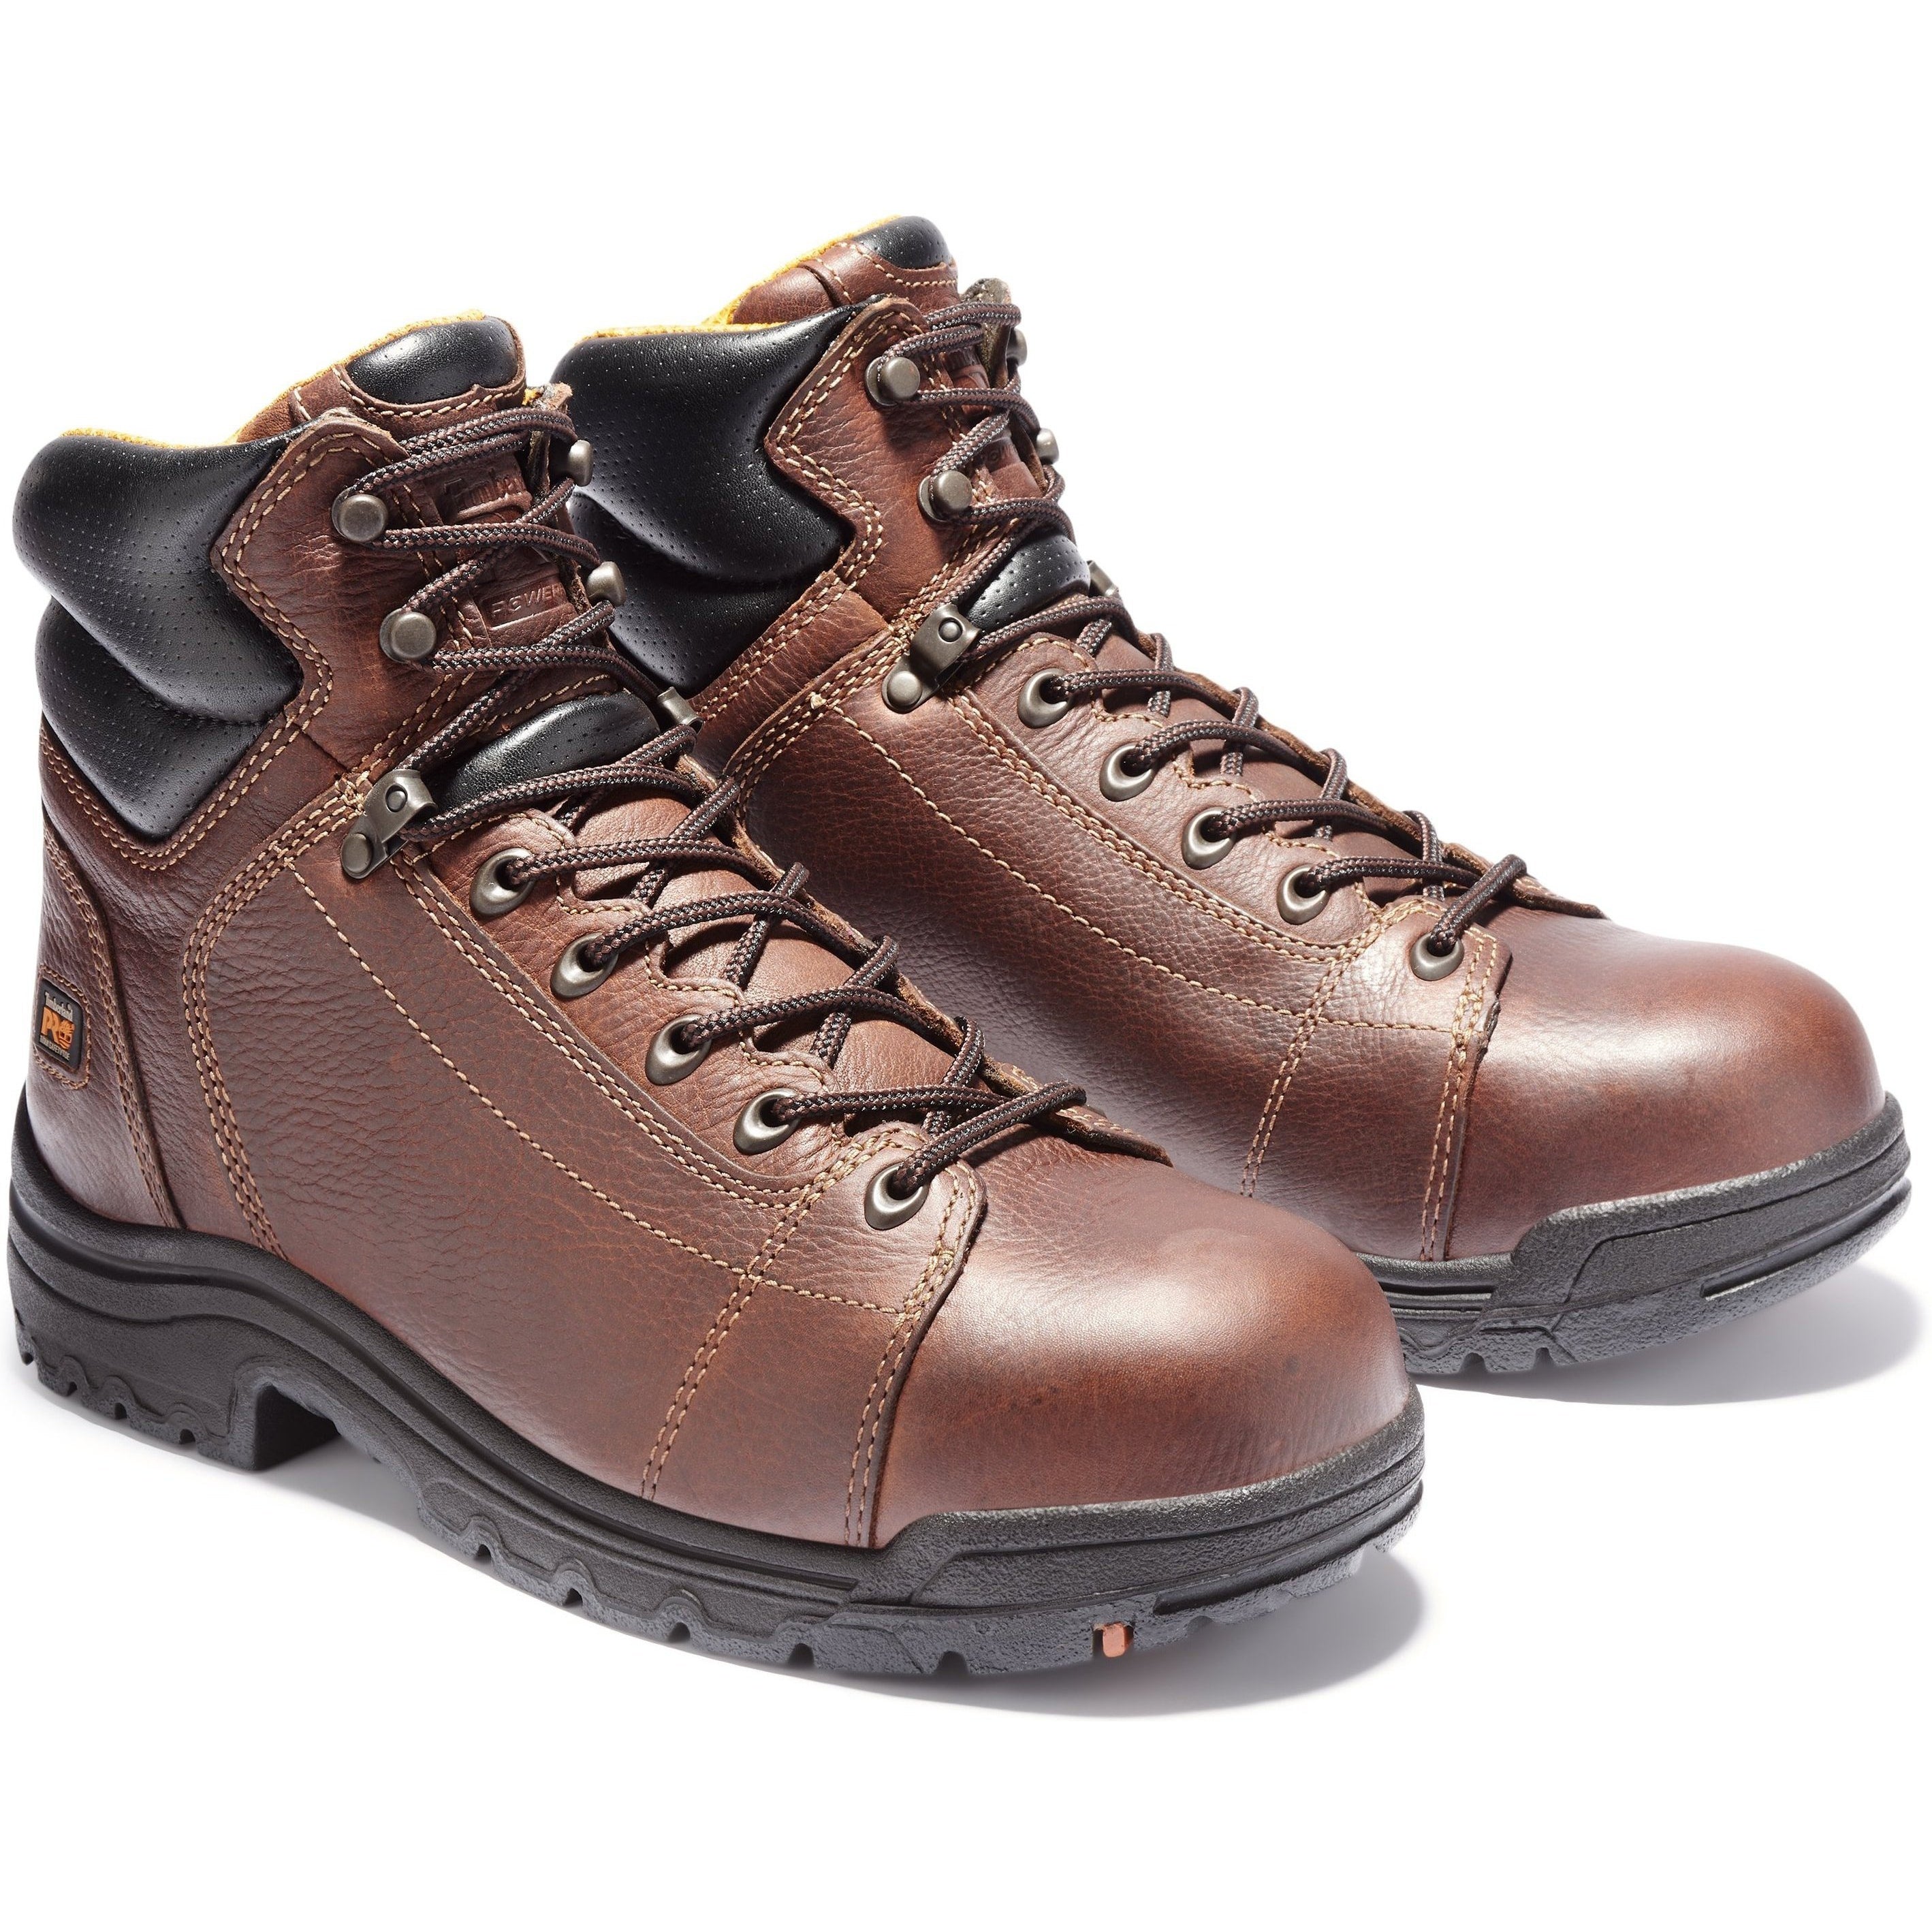 Timberland PRO Men's TiTAN 6" Alloy Toe Work Boots -Brown- TB050506242 7 / Medium / Brown - Overlook Boots